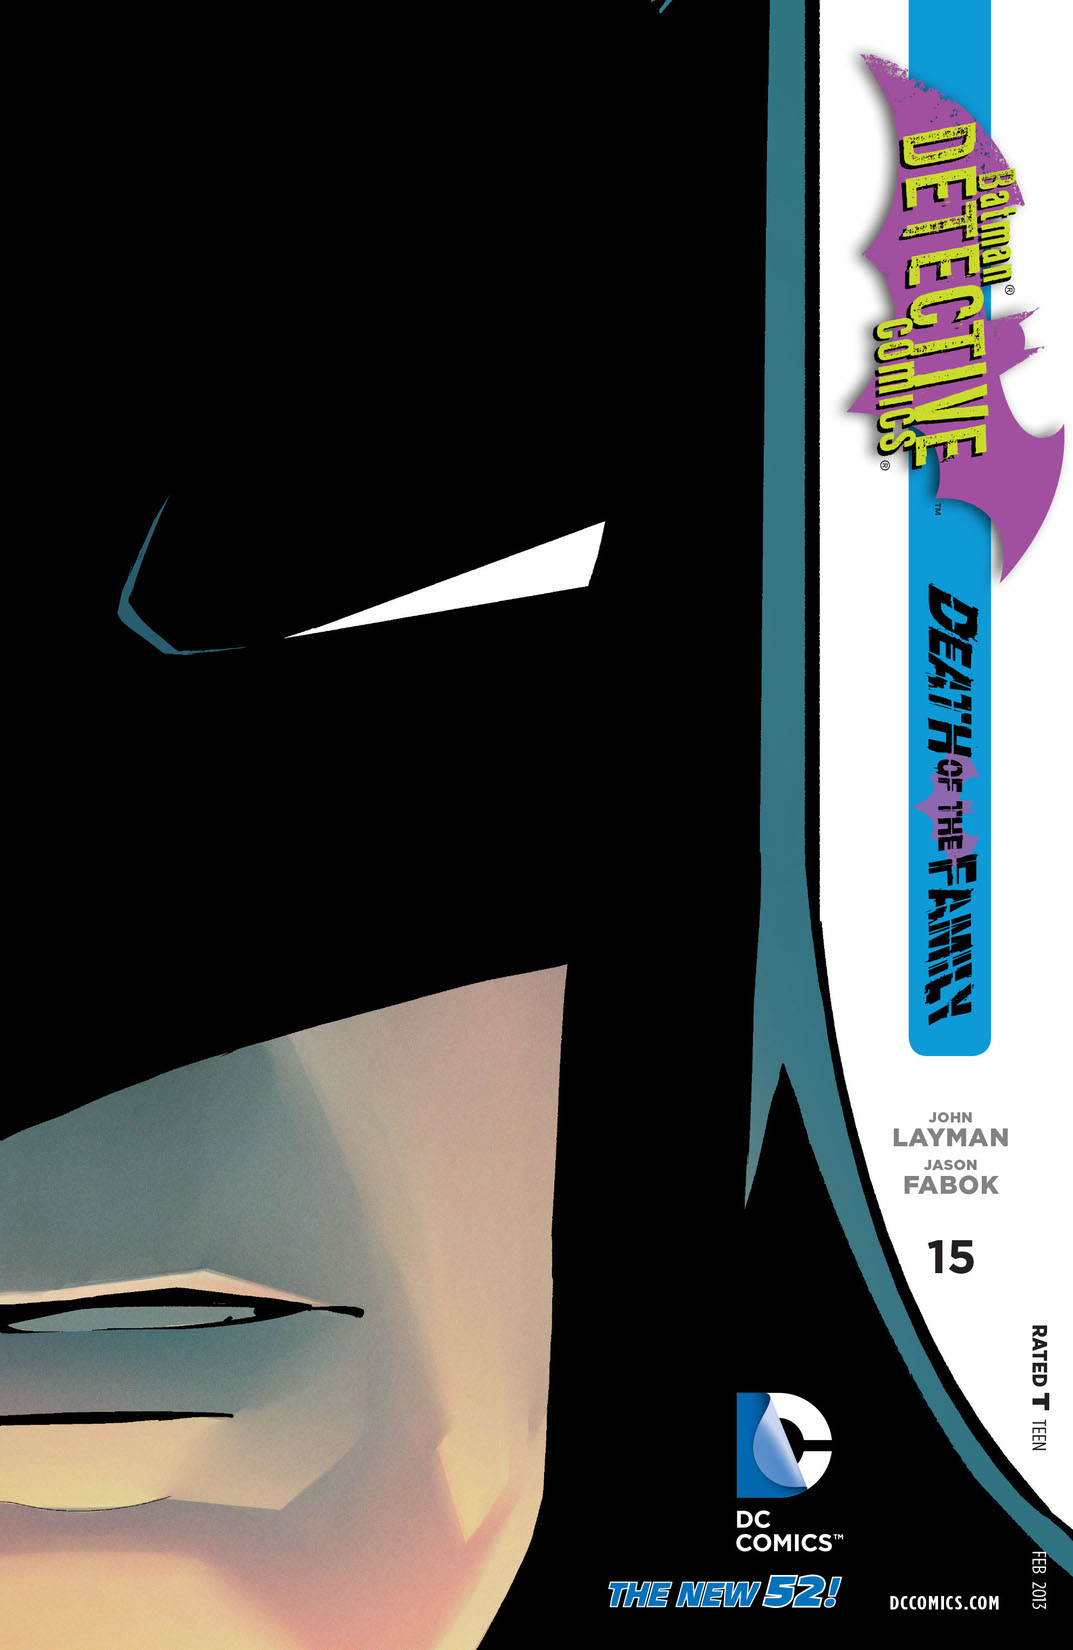 Detective Comics (2011-) #15 preview images